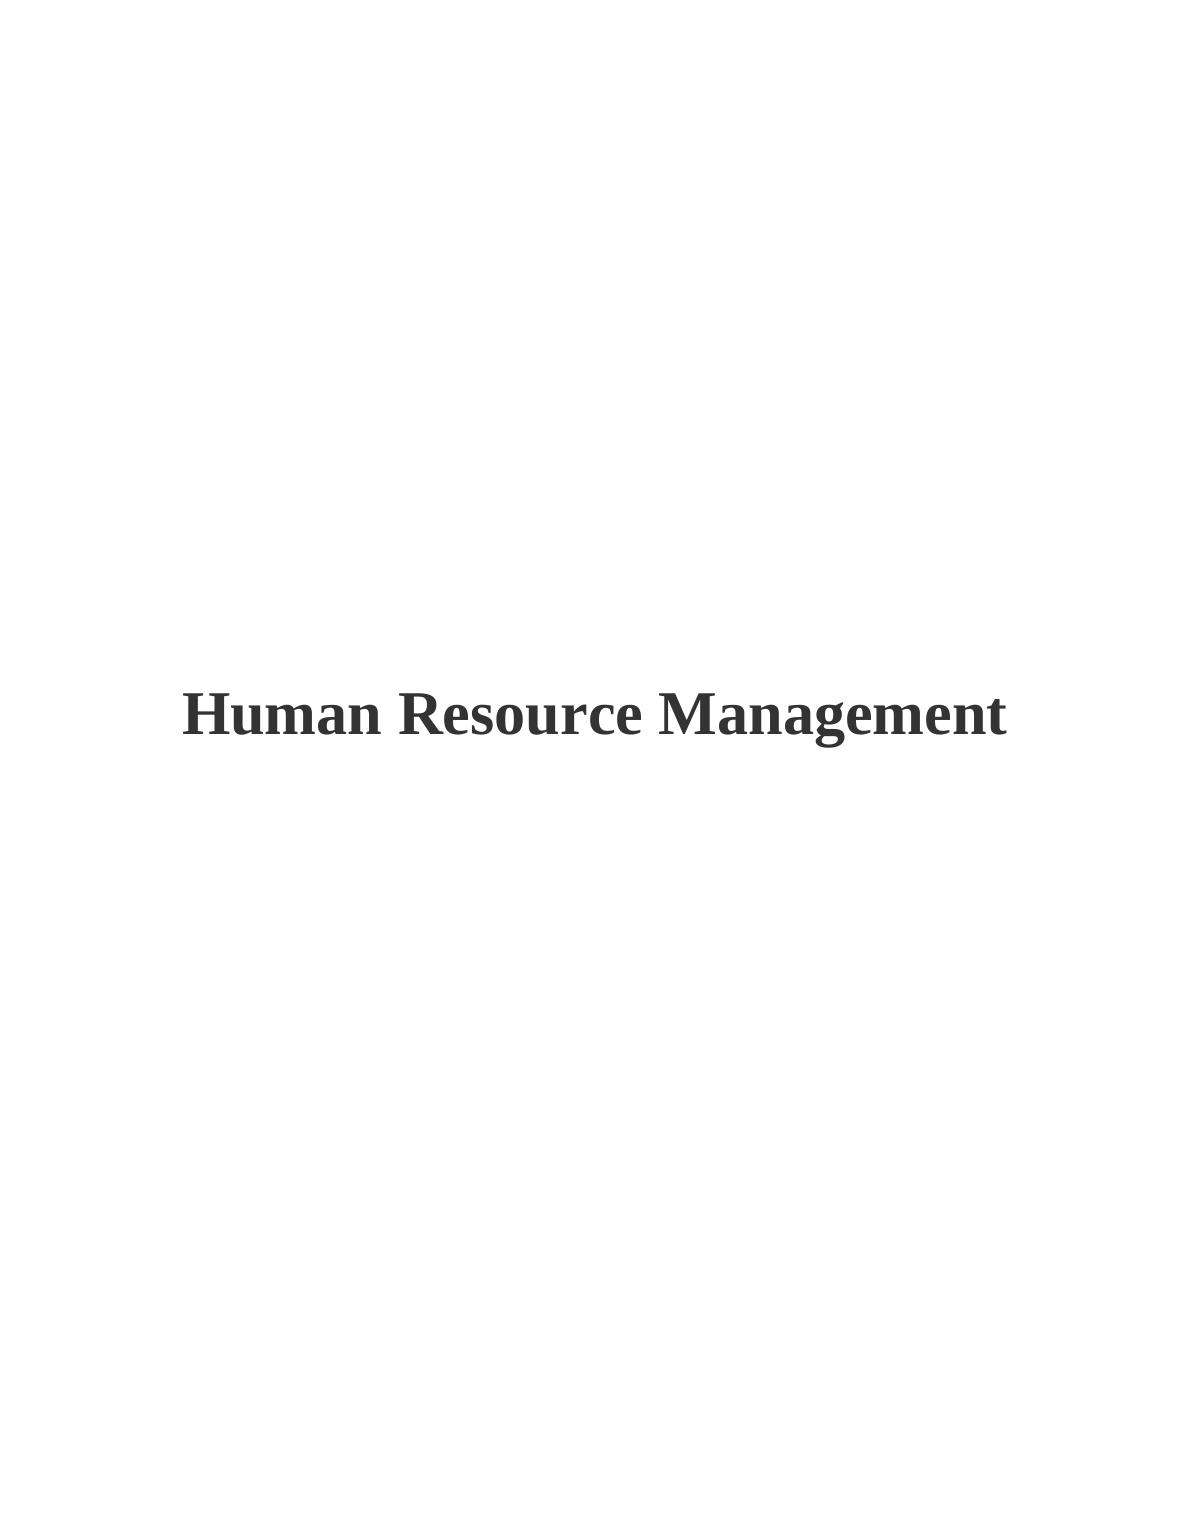 Human Resource Management Assignment - ASDA organisation_1